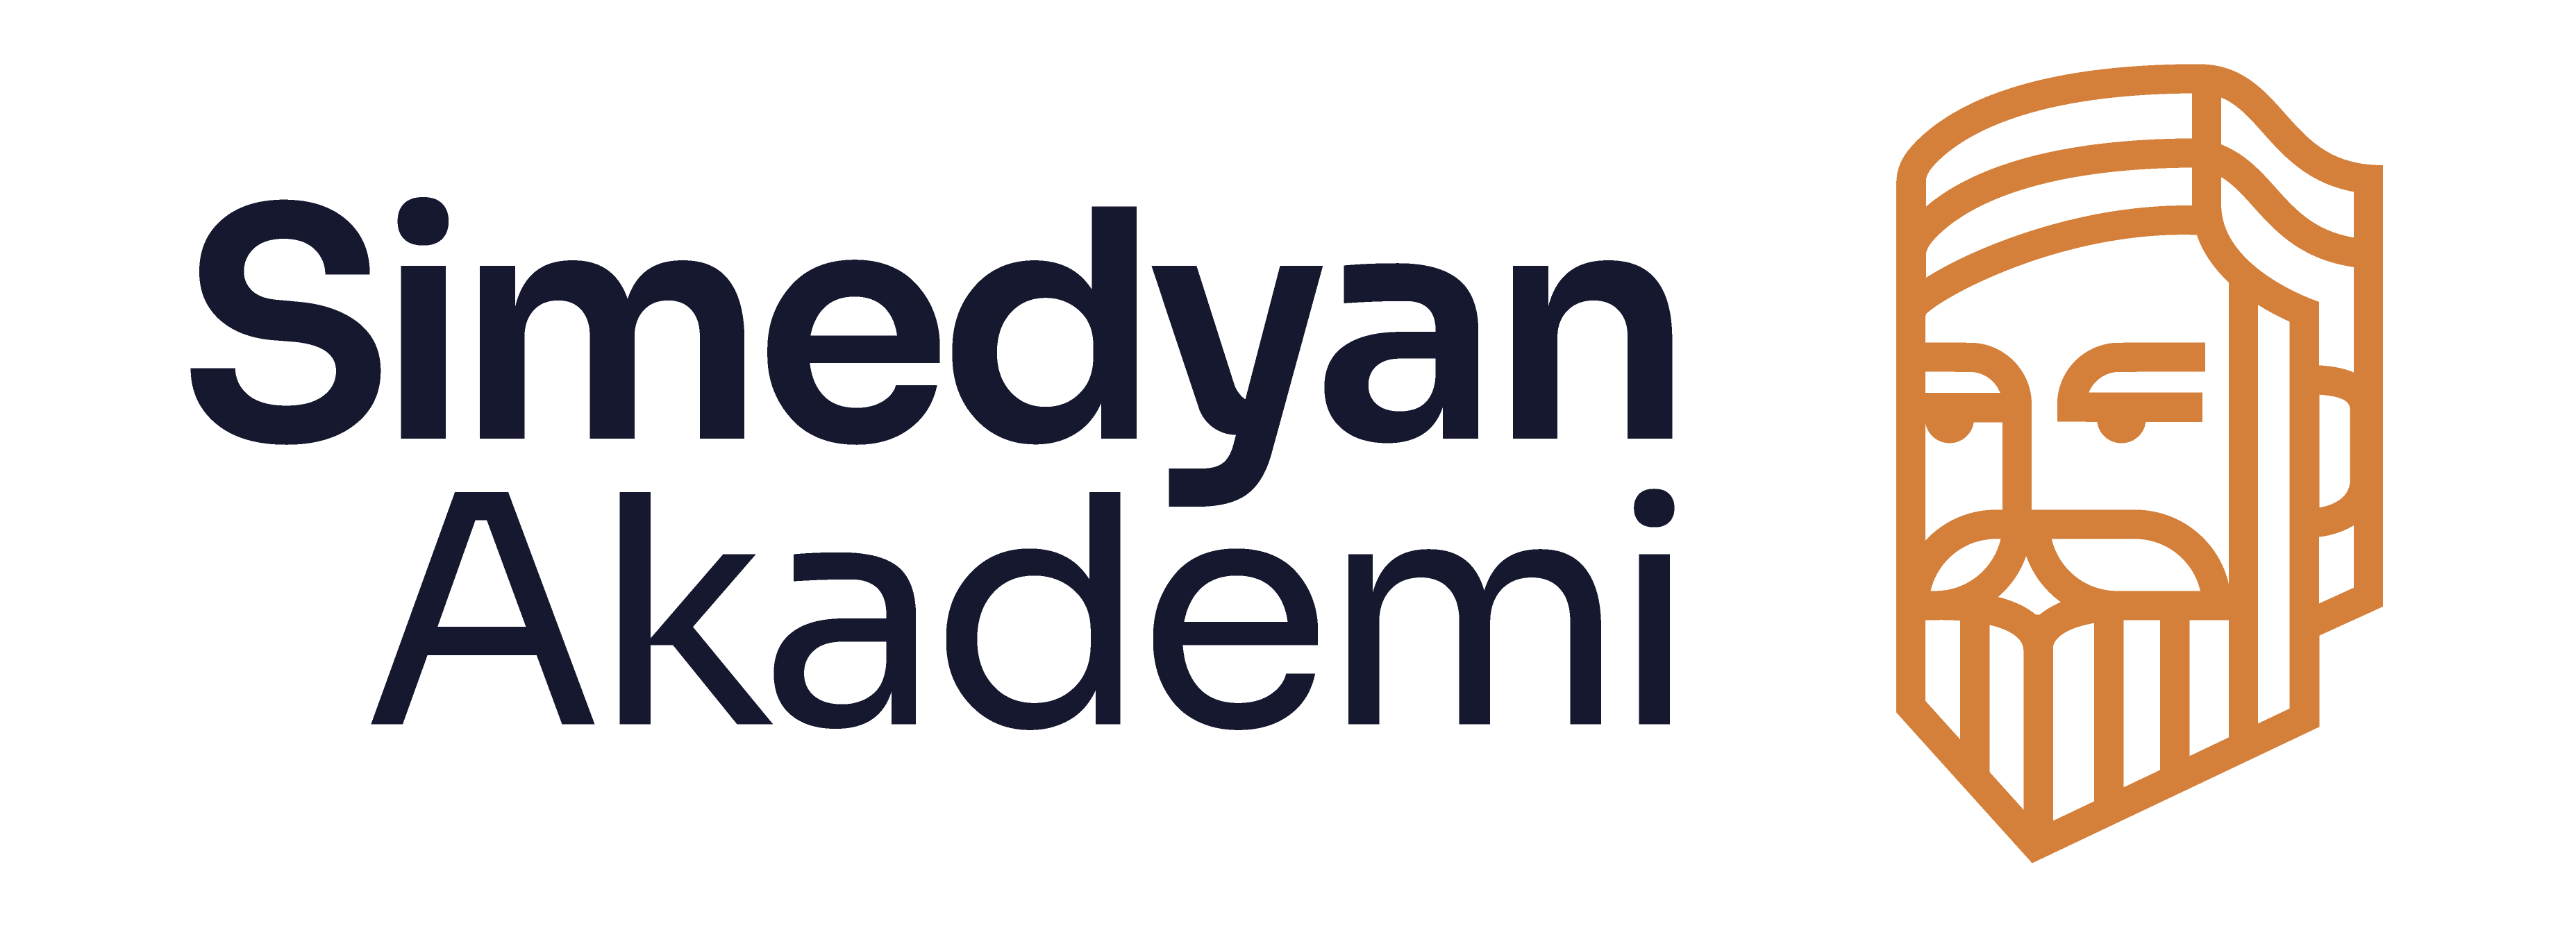 Simedyan Akademi